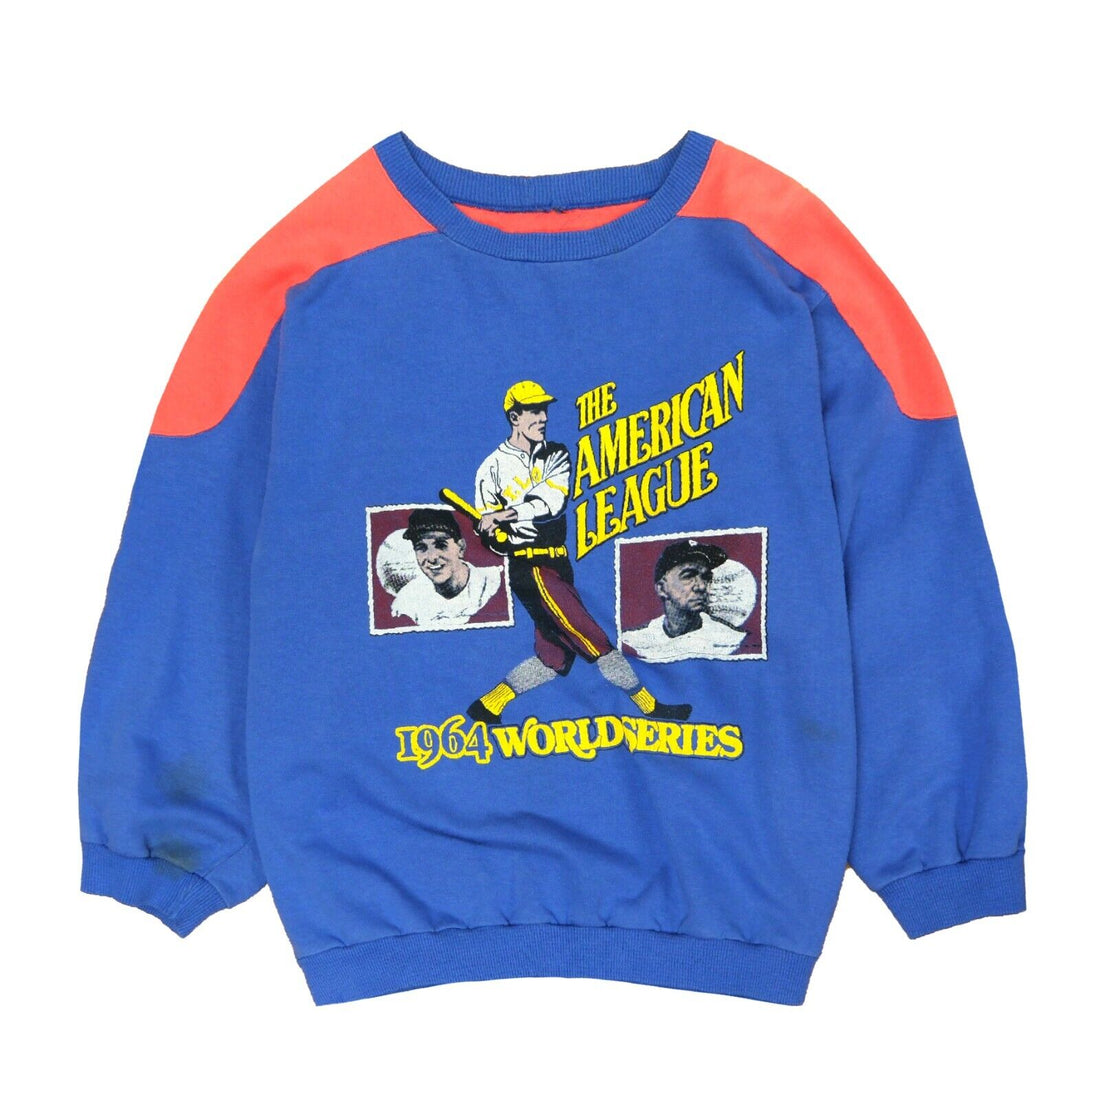 Vintage The American League 1964 World Series Sweatshirt Crewneck Size XL Blue